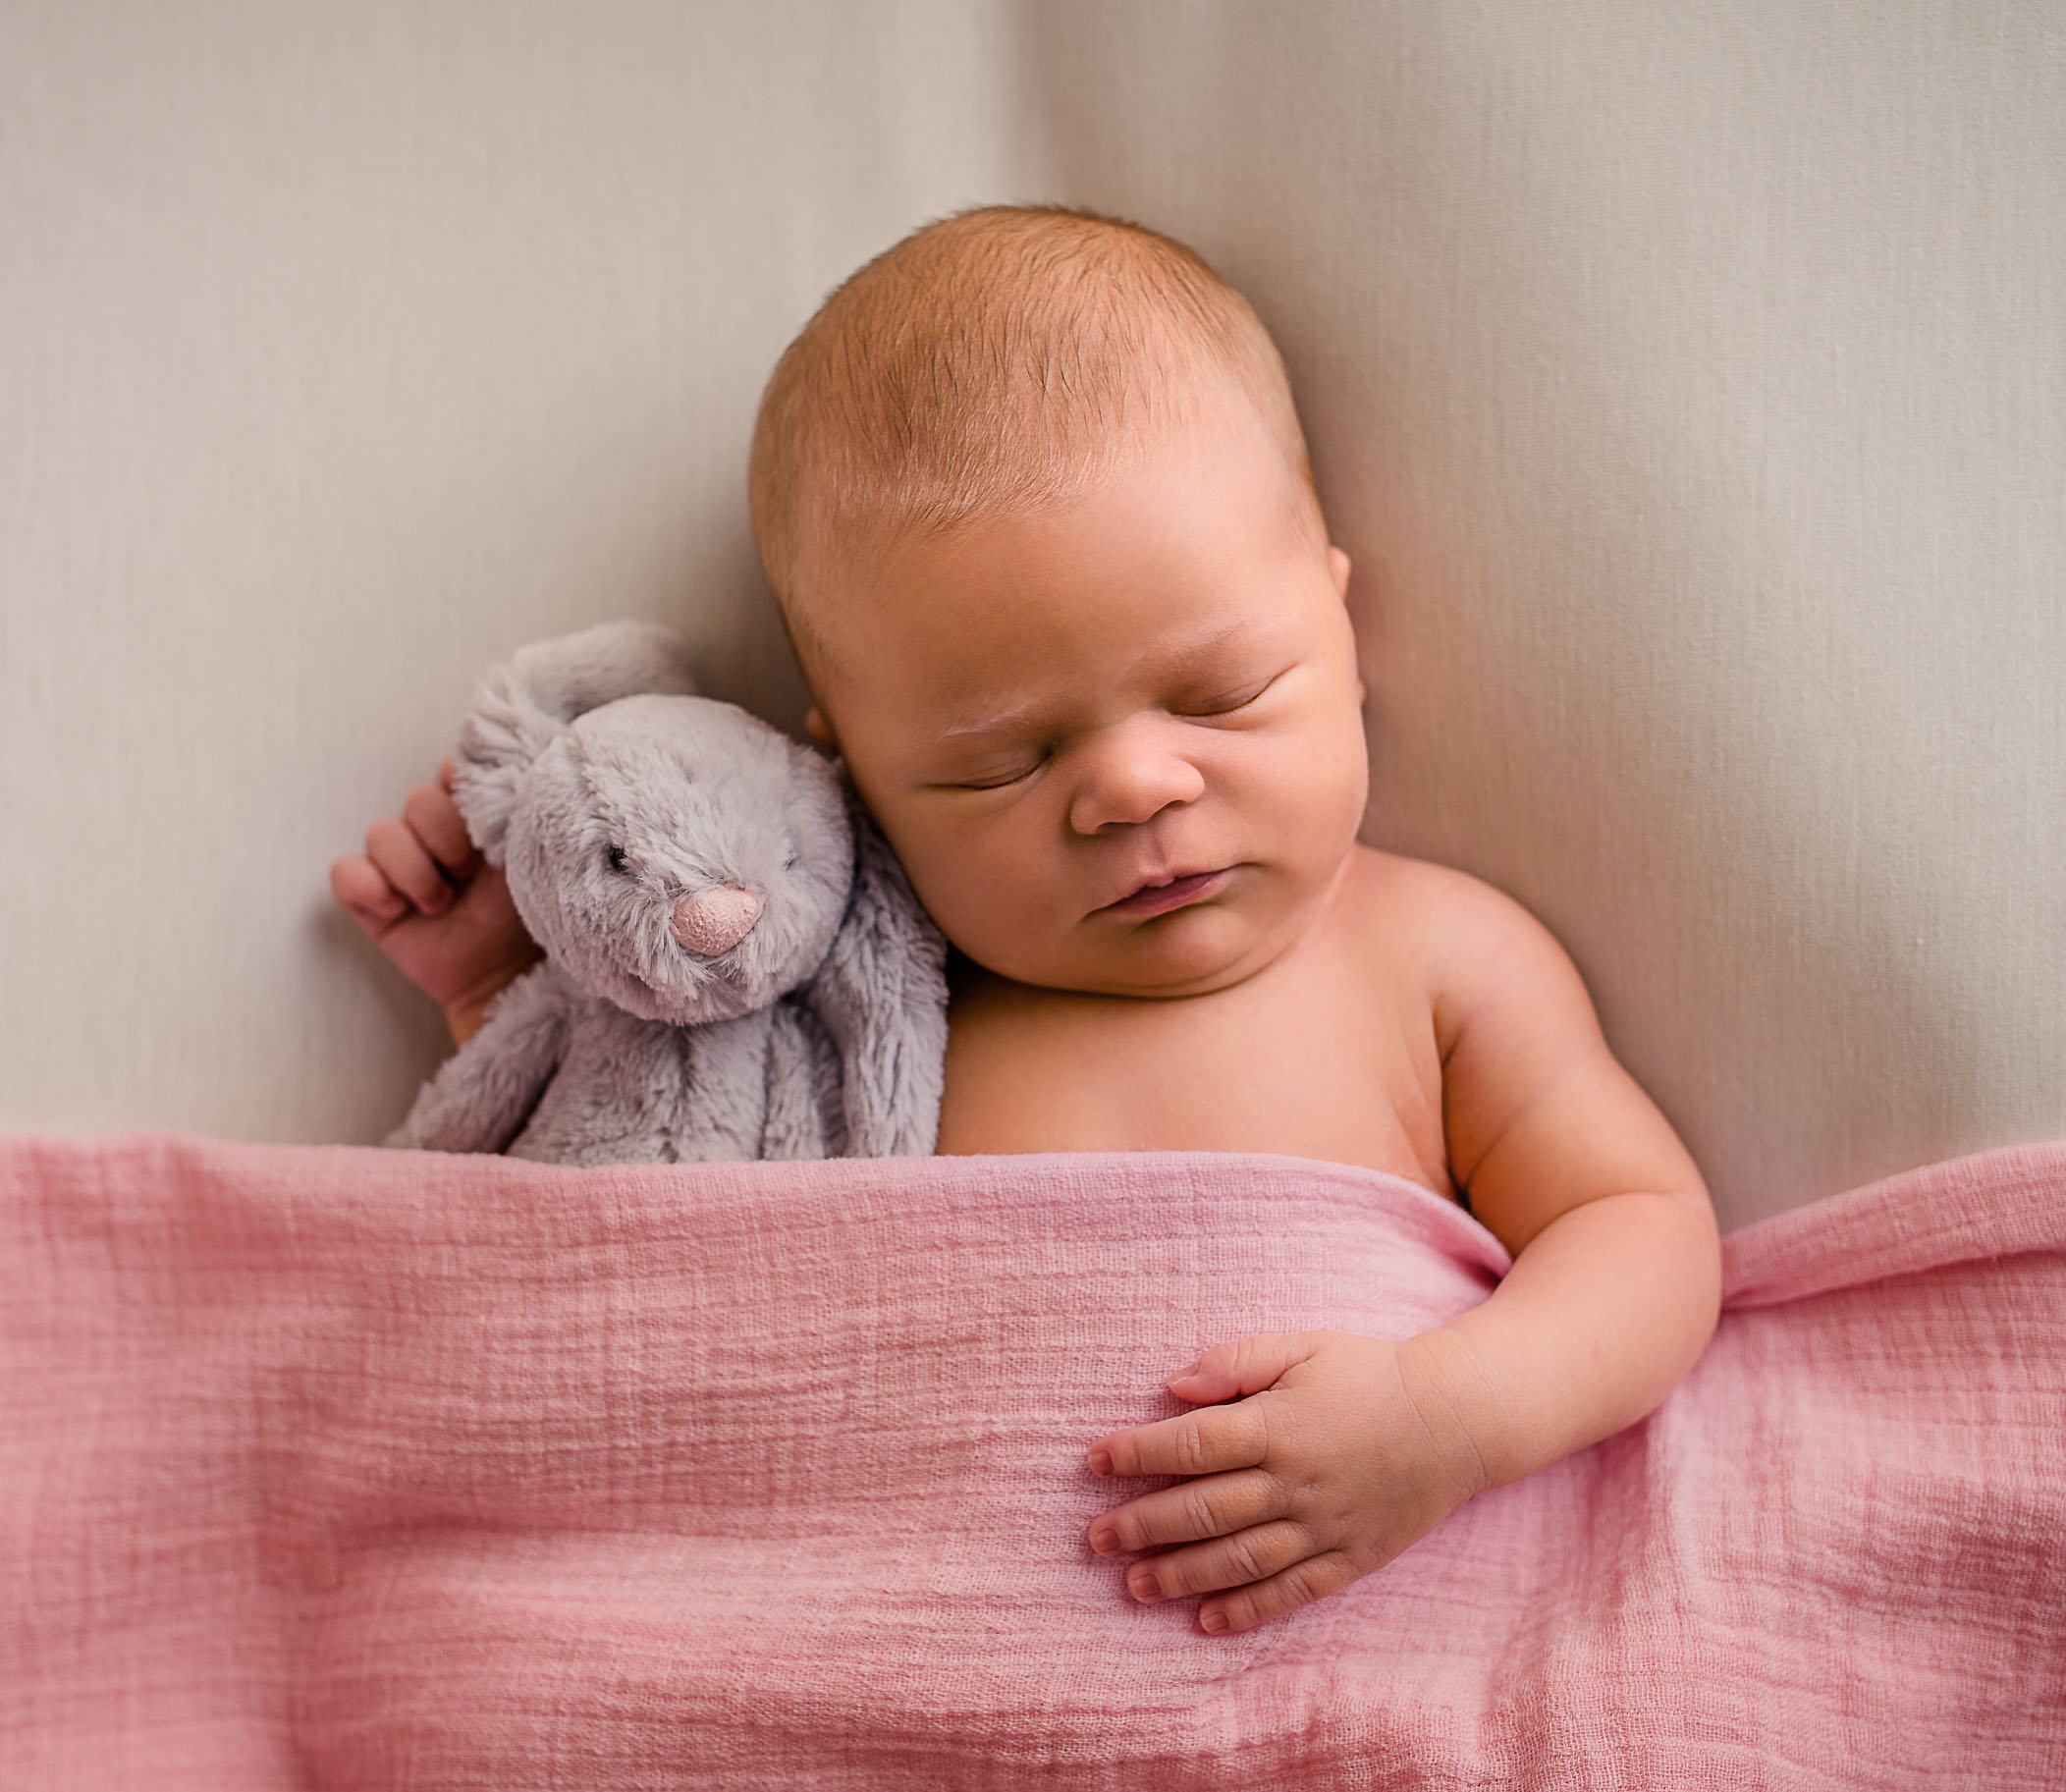 newborn baby girl sleeping under pink blanket with stuffed rabbit toy